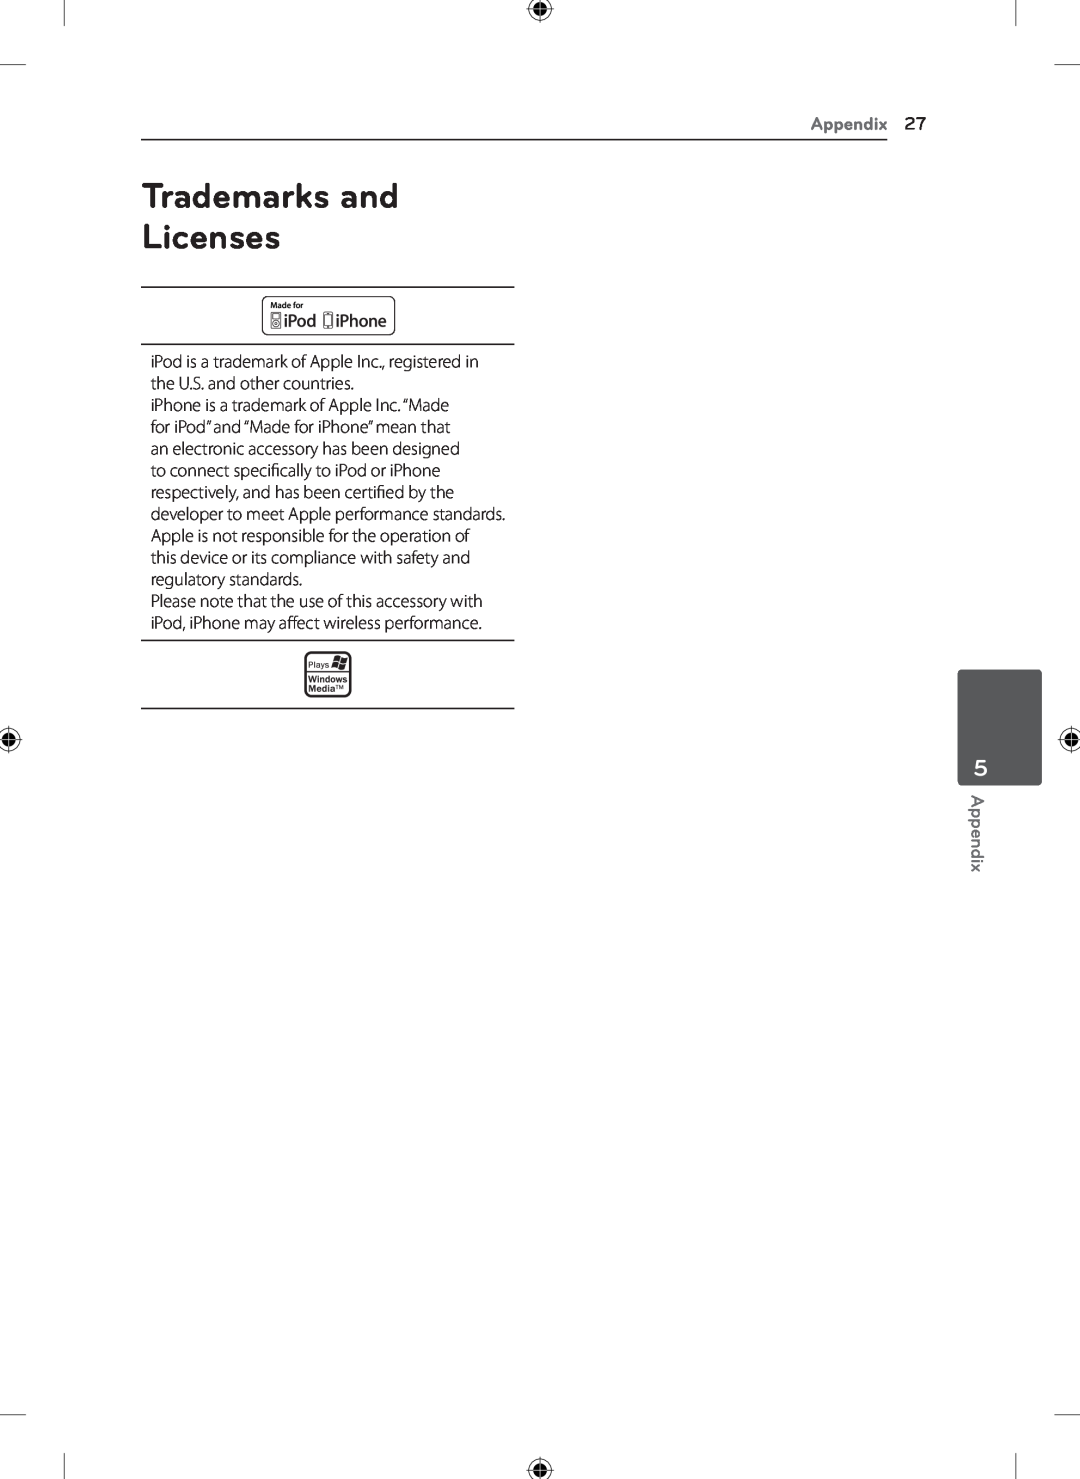 LG Electronics KSM1506 owner manual Trademarks and Licenses, Appendix 